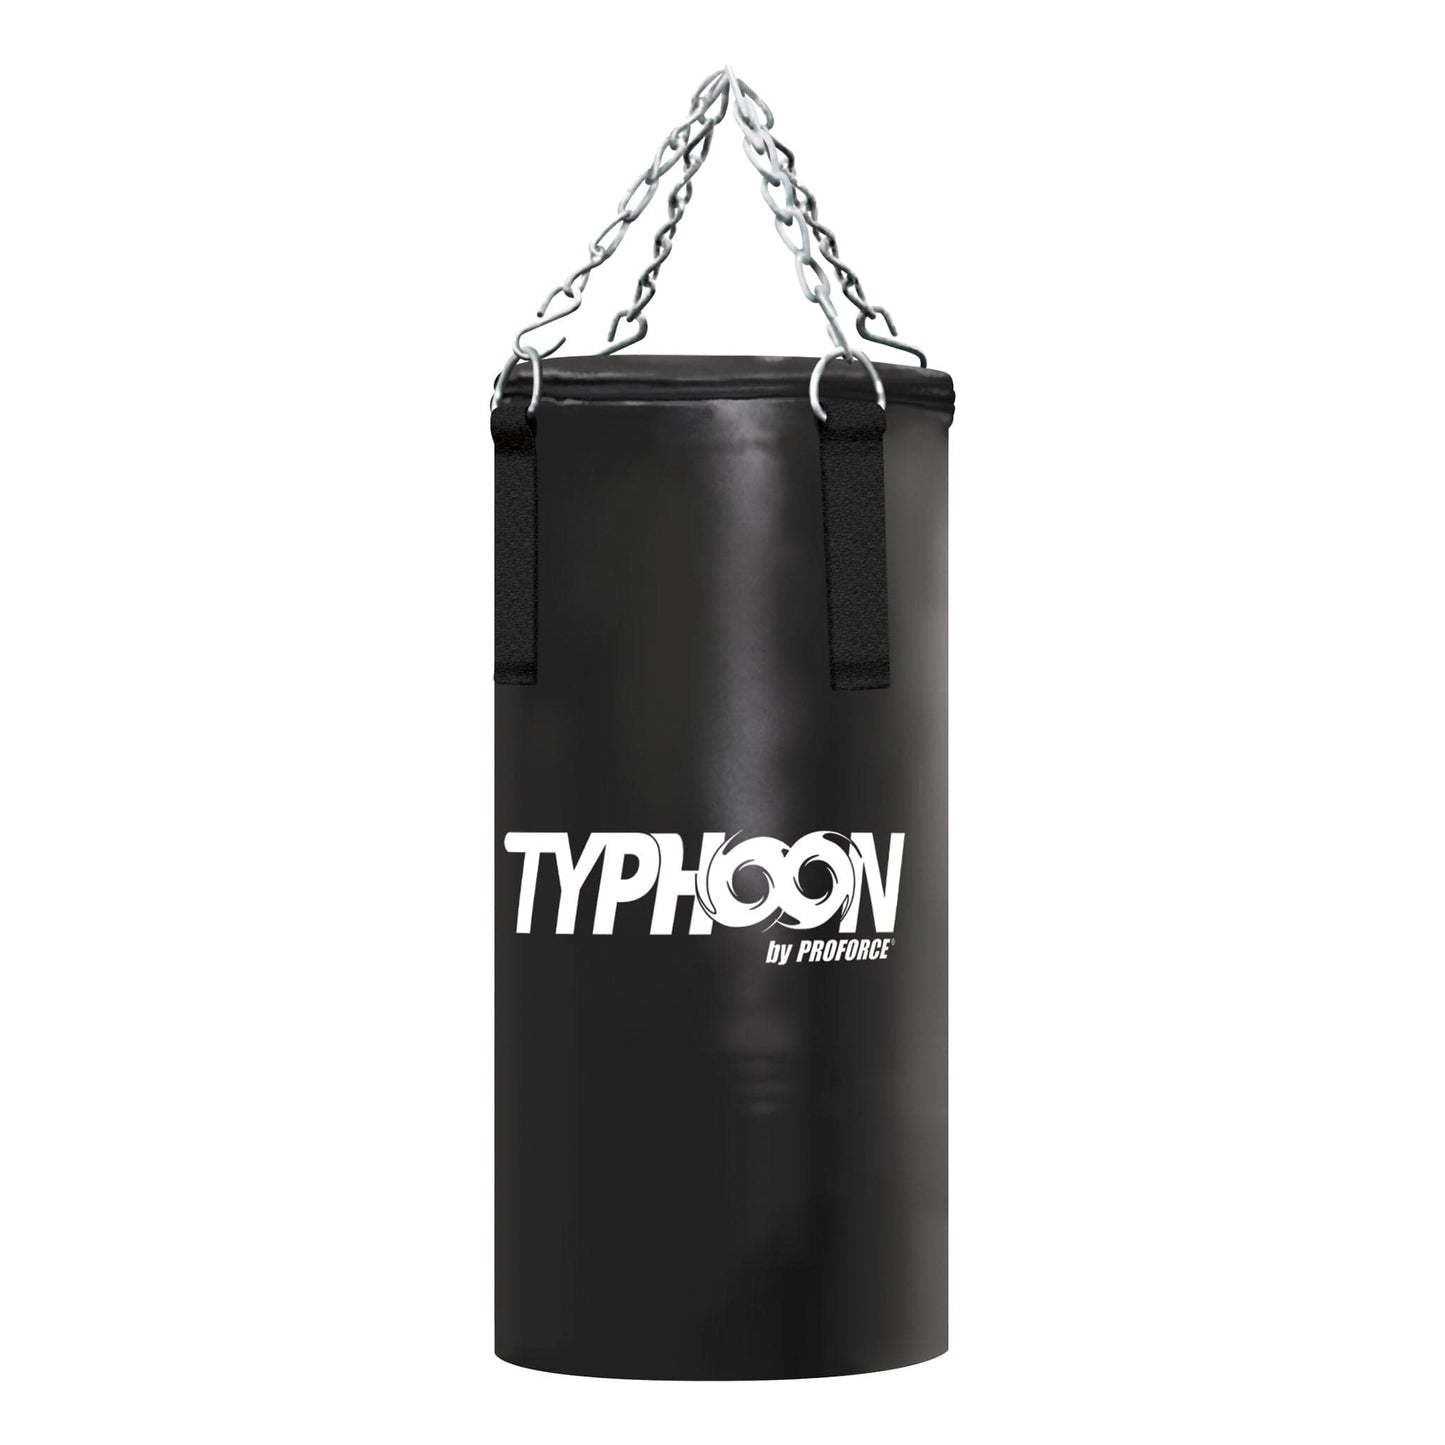 ProForce sporting goods ProForce Typhoon Water Training Bag boxing bag